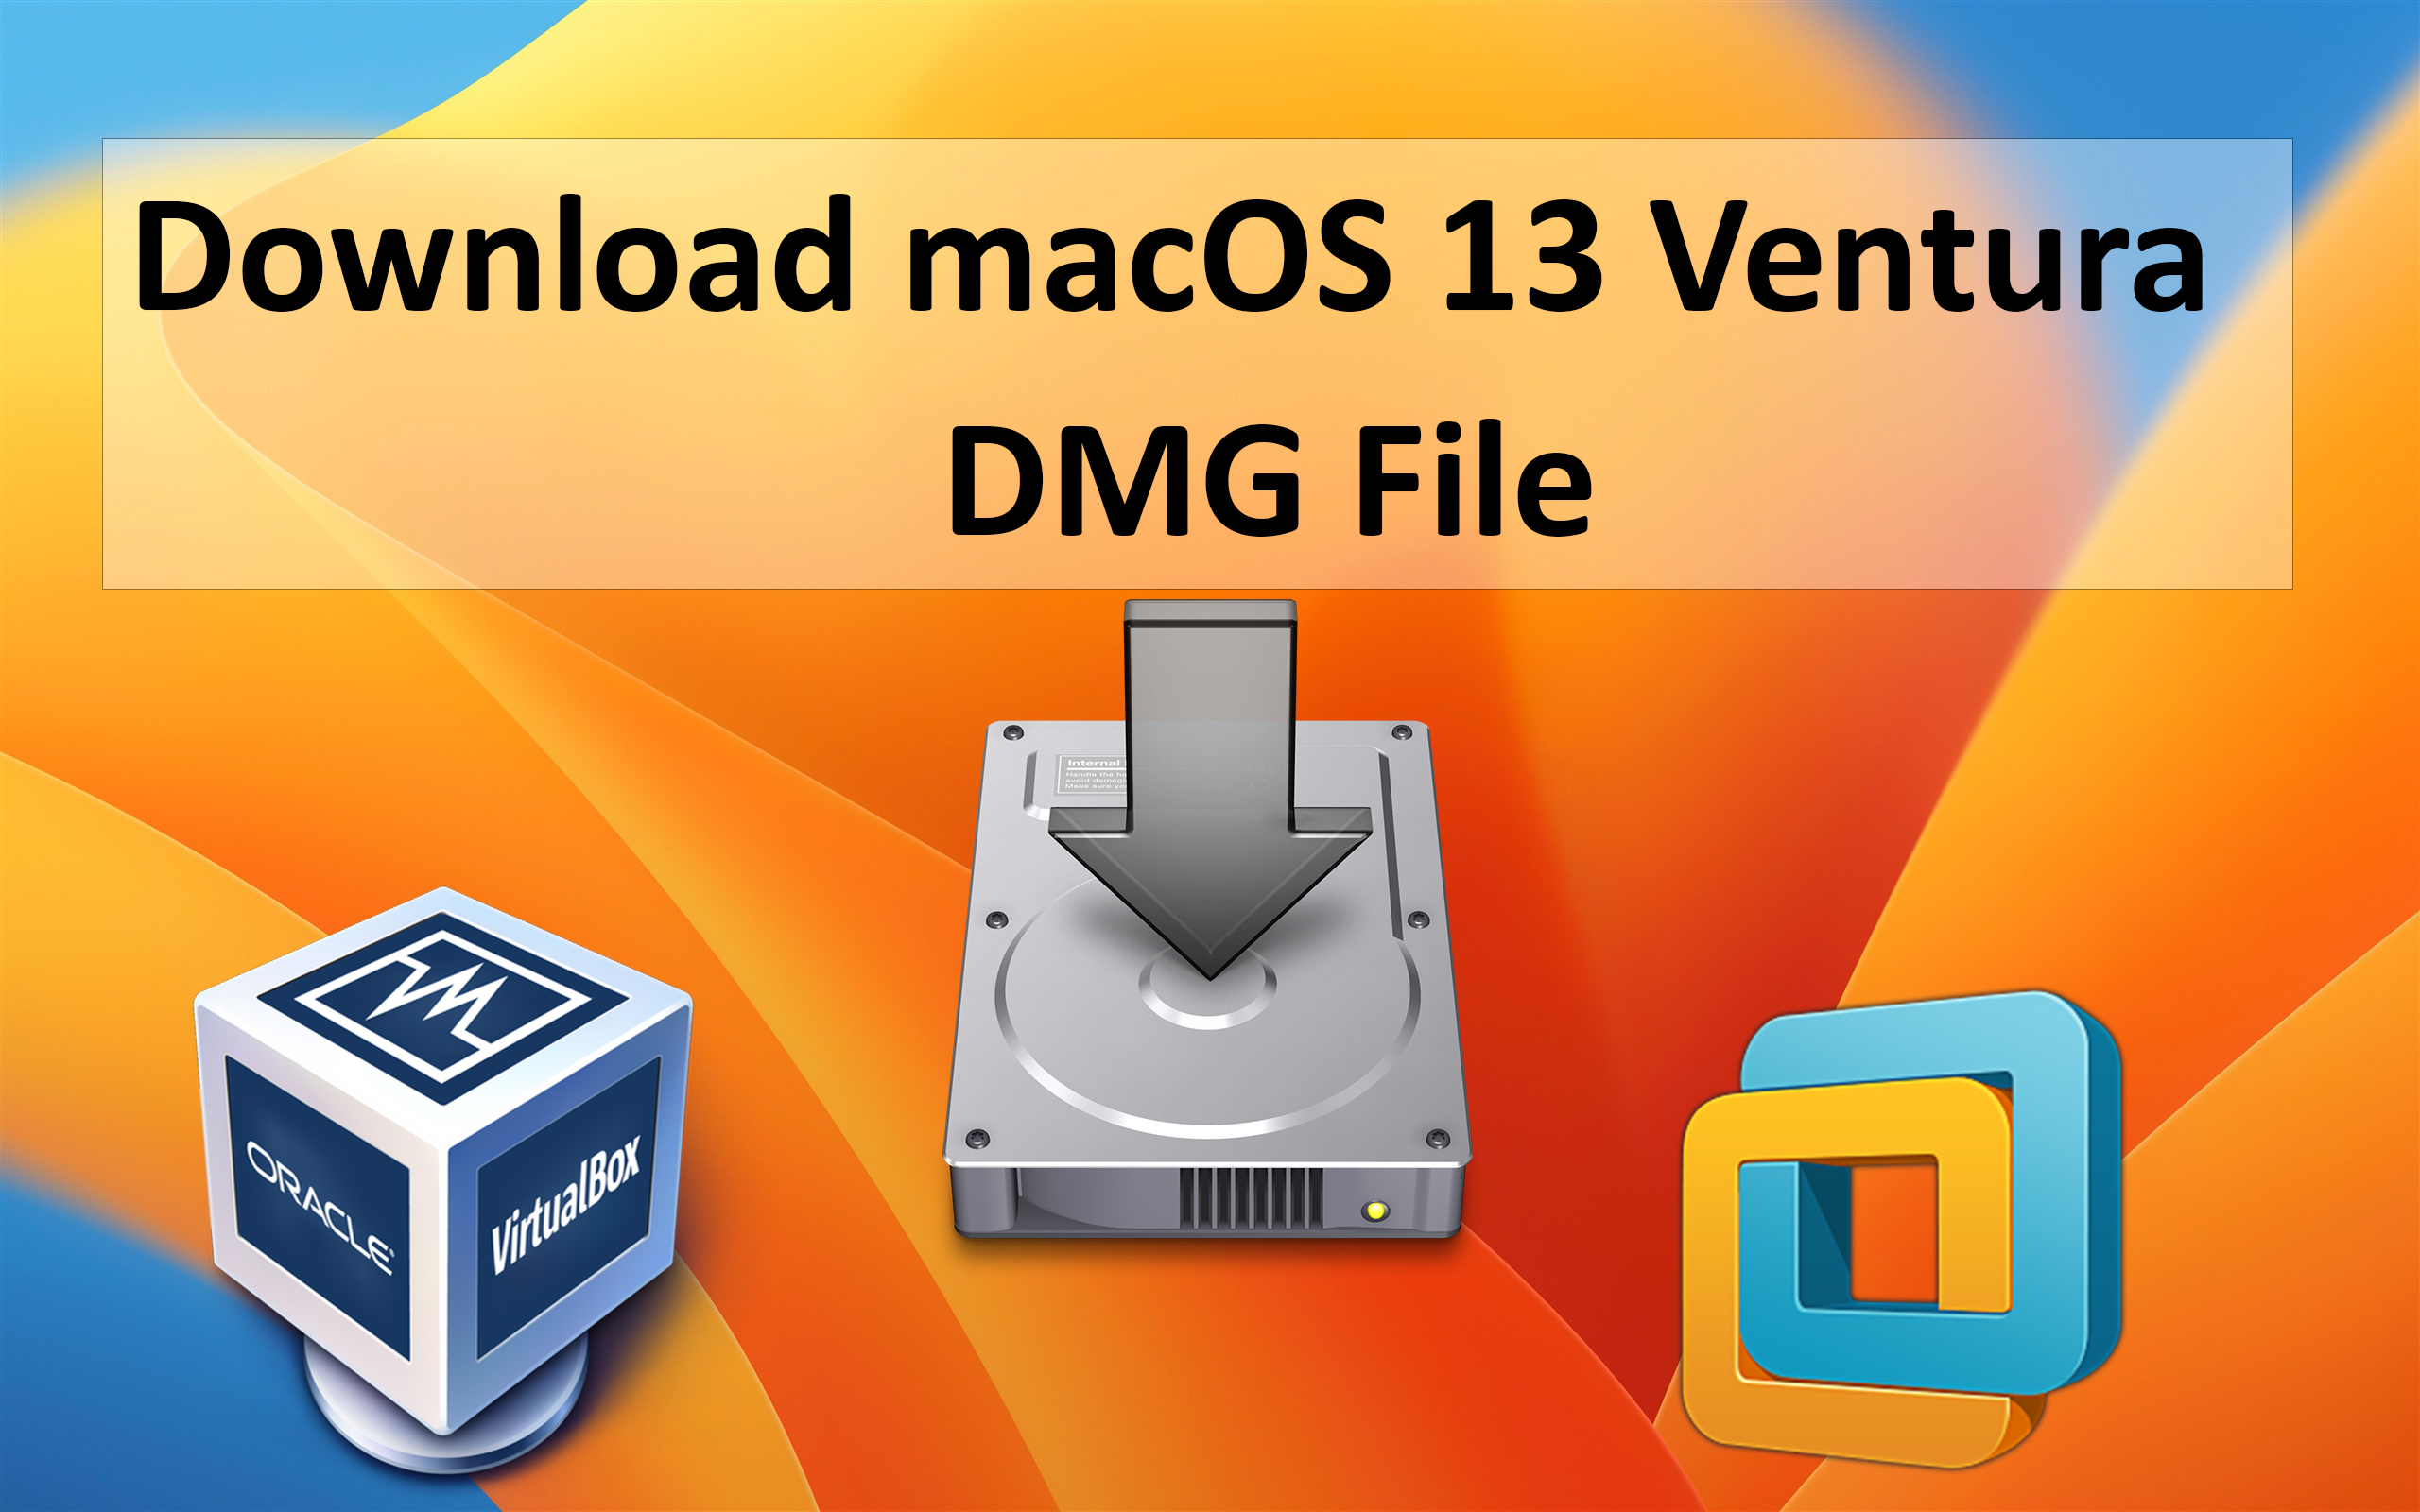 download macos ventura dmg file on windows